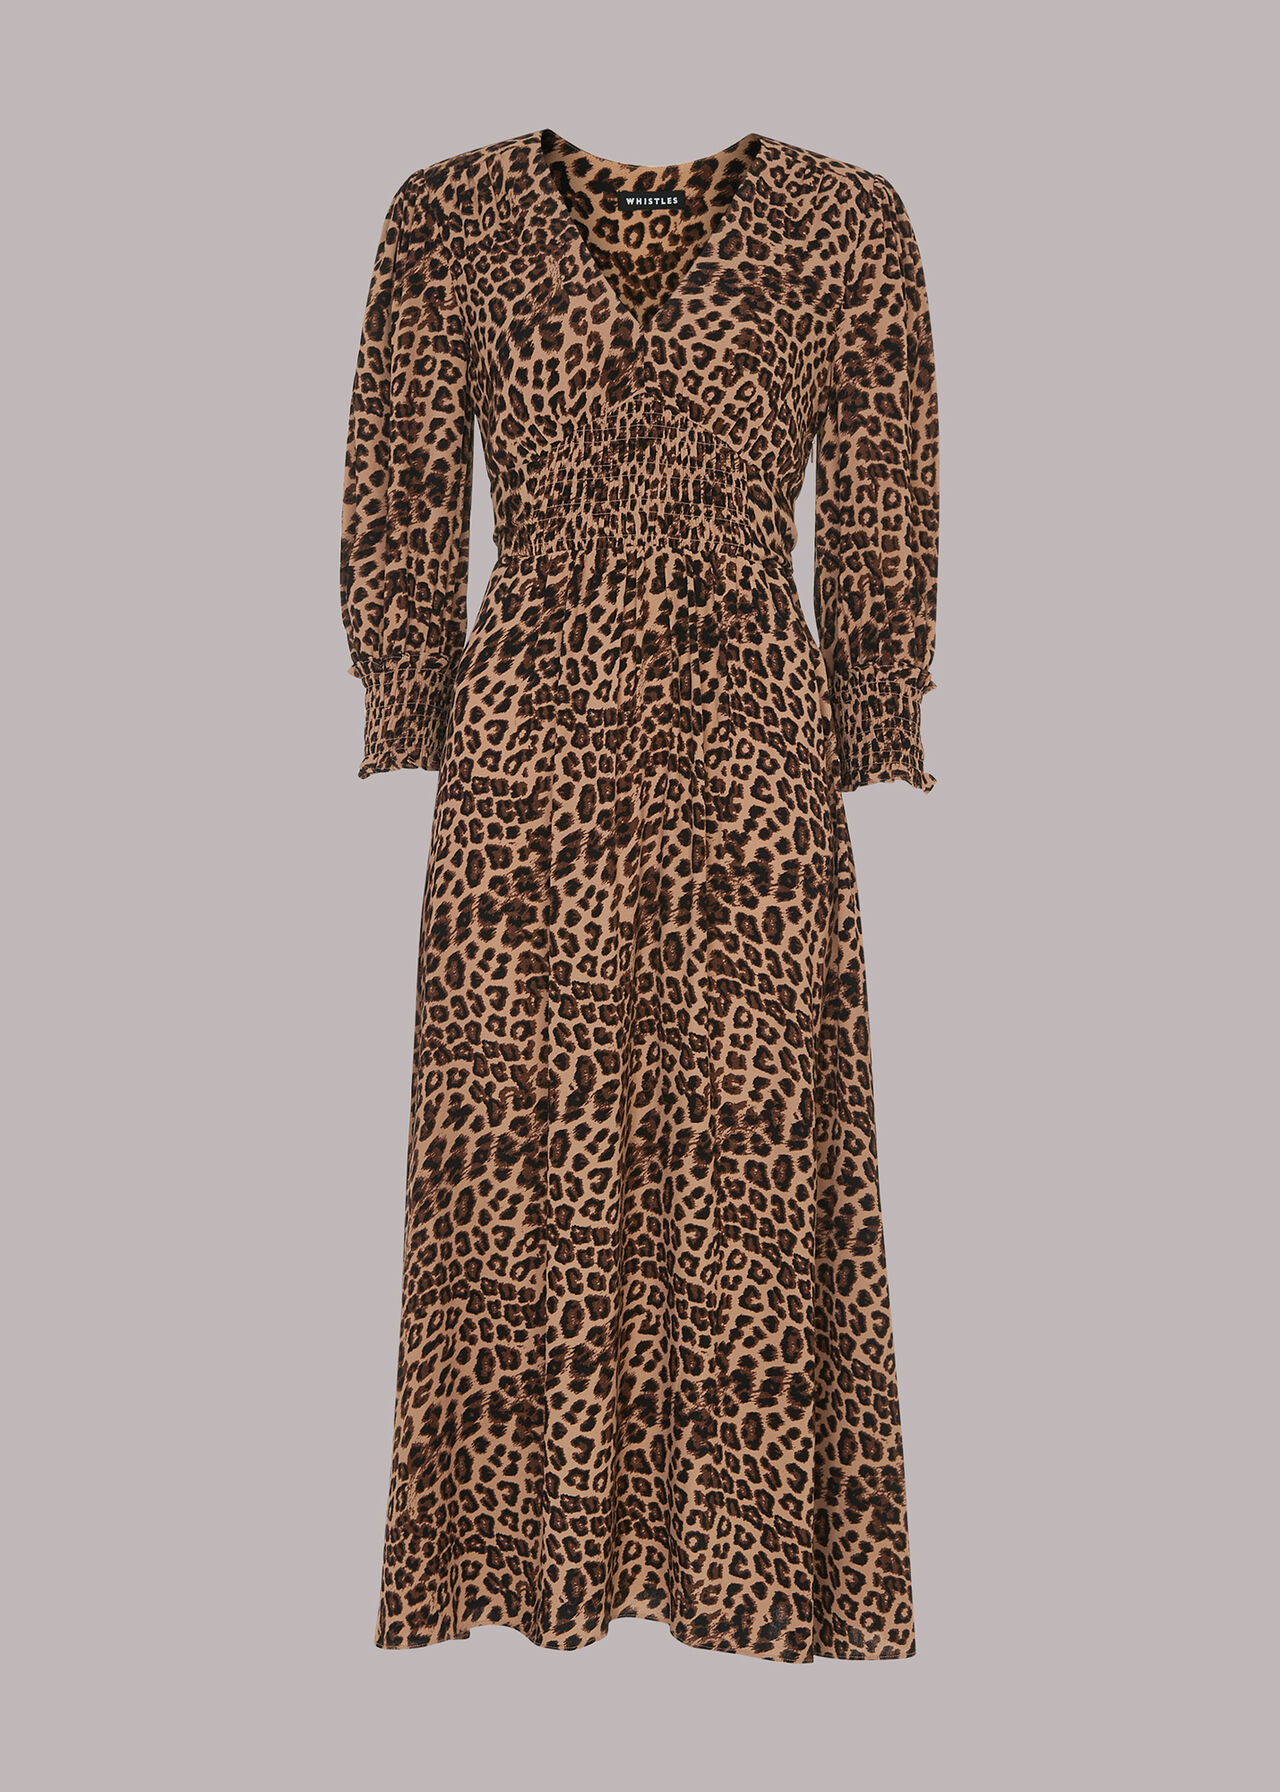 Jungle Cheetah Shirred Dress